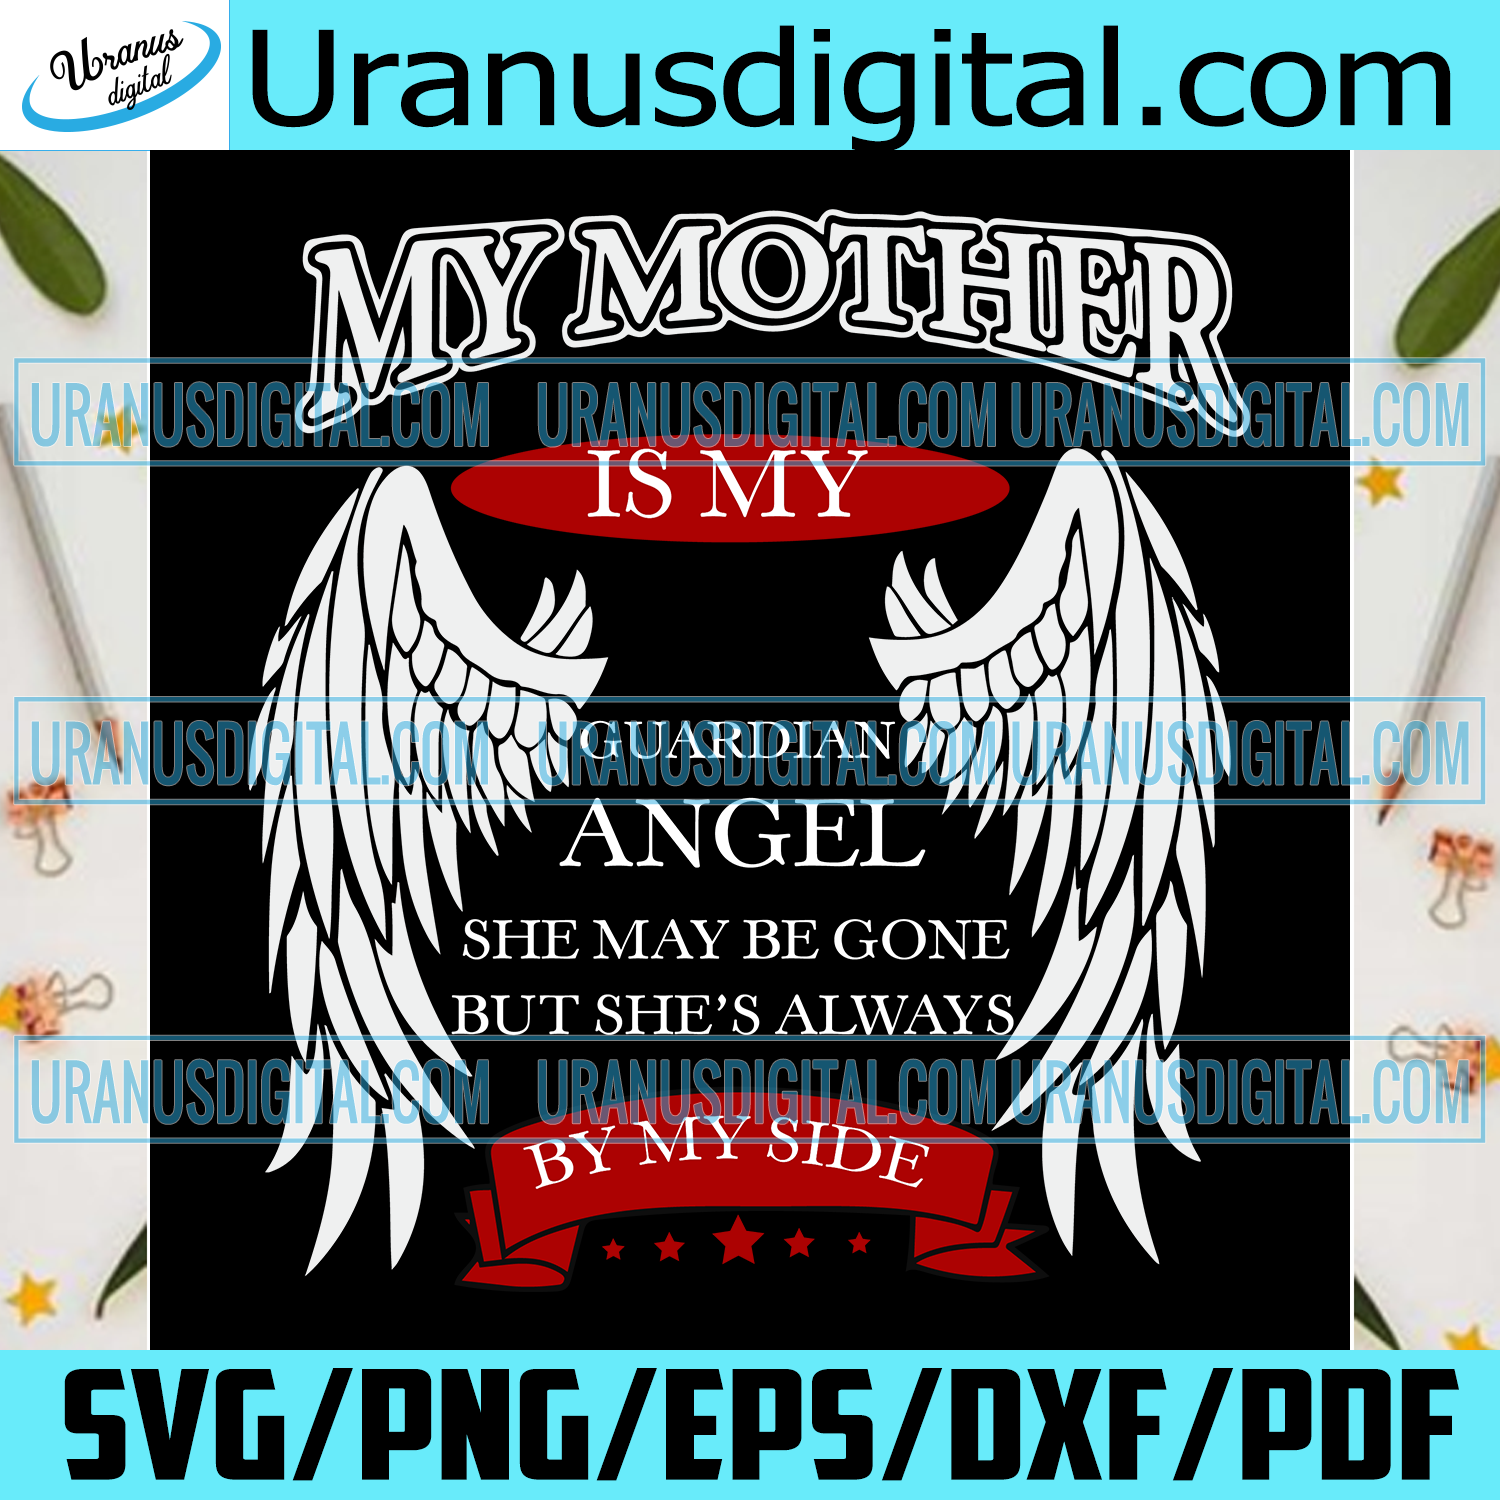 Download My Mother Is My Guardian Angel Svg Trending Svg Guardian Angel Moth Uranusdigital